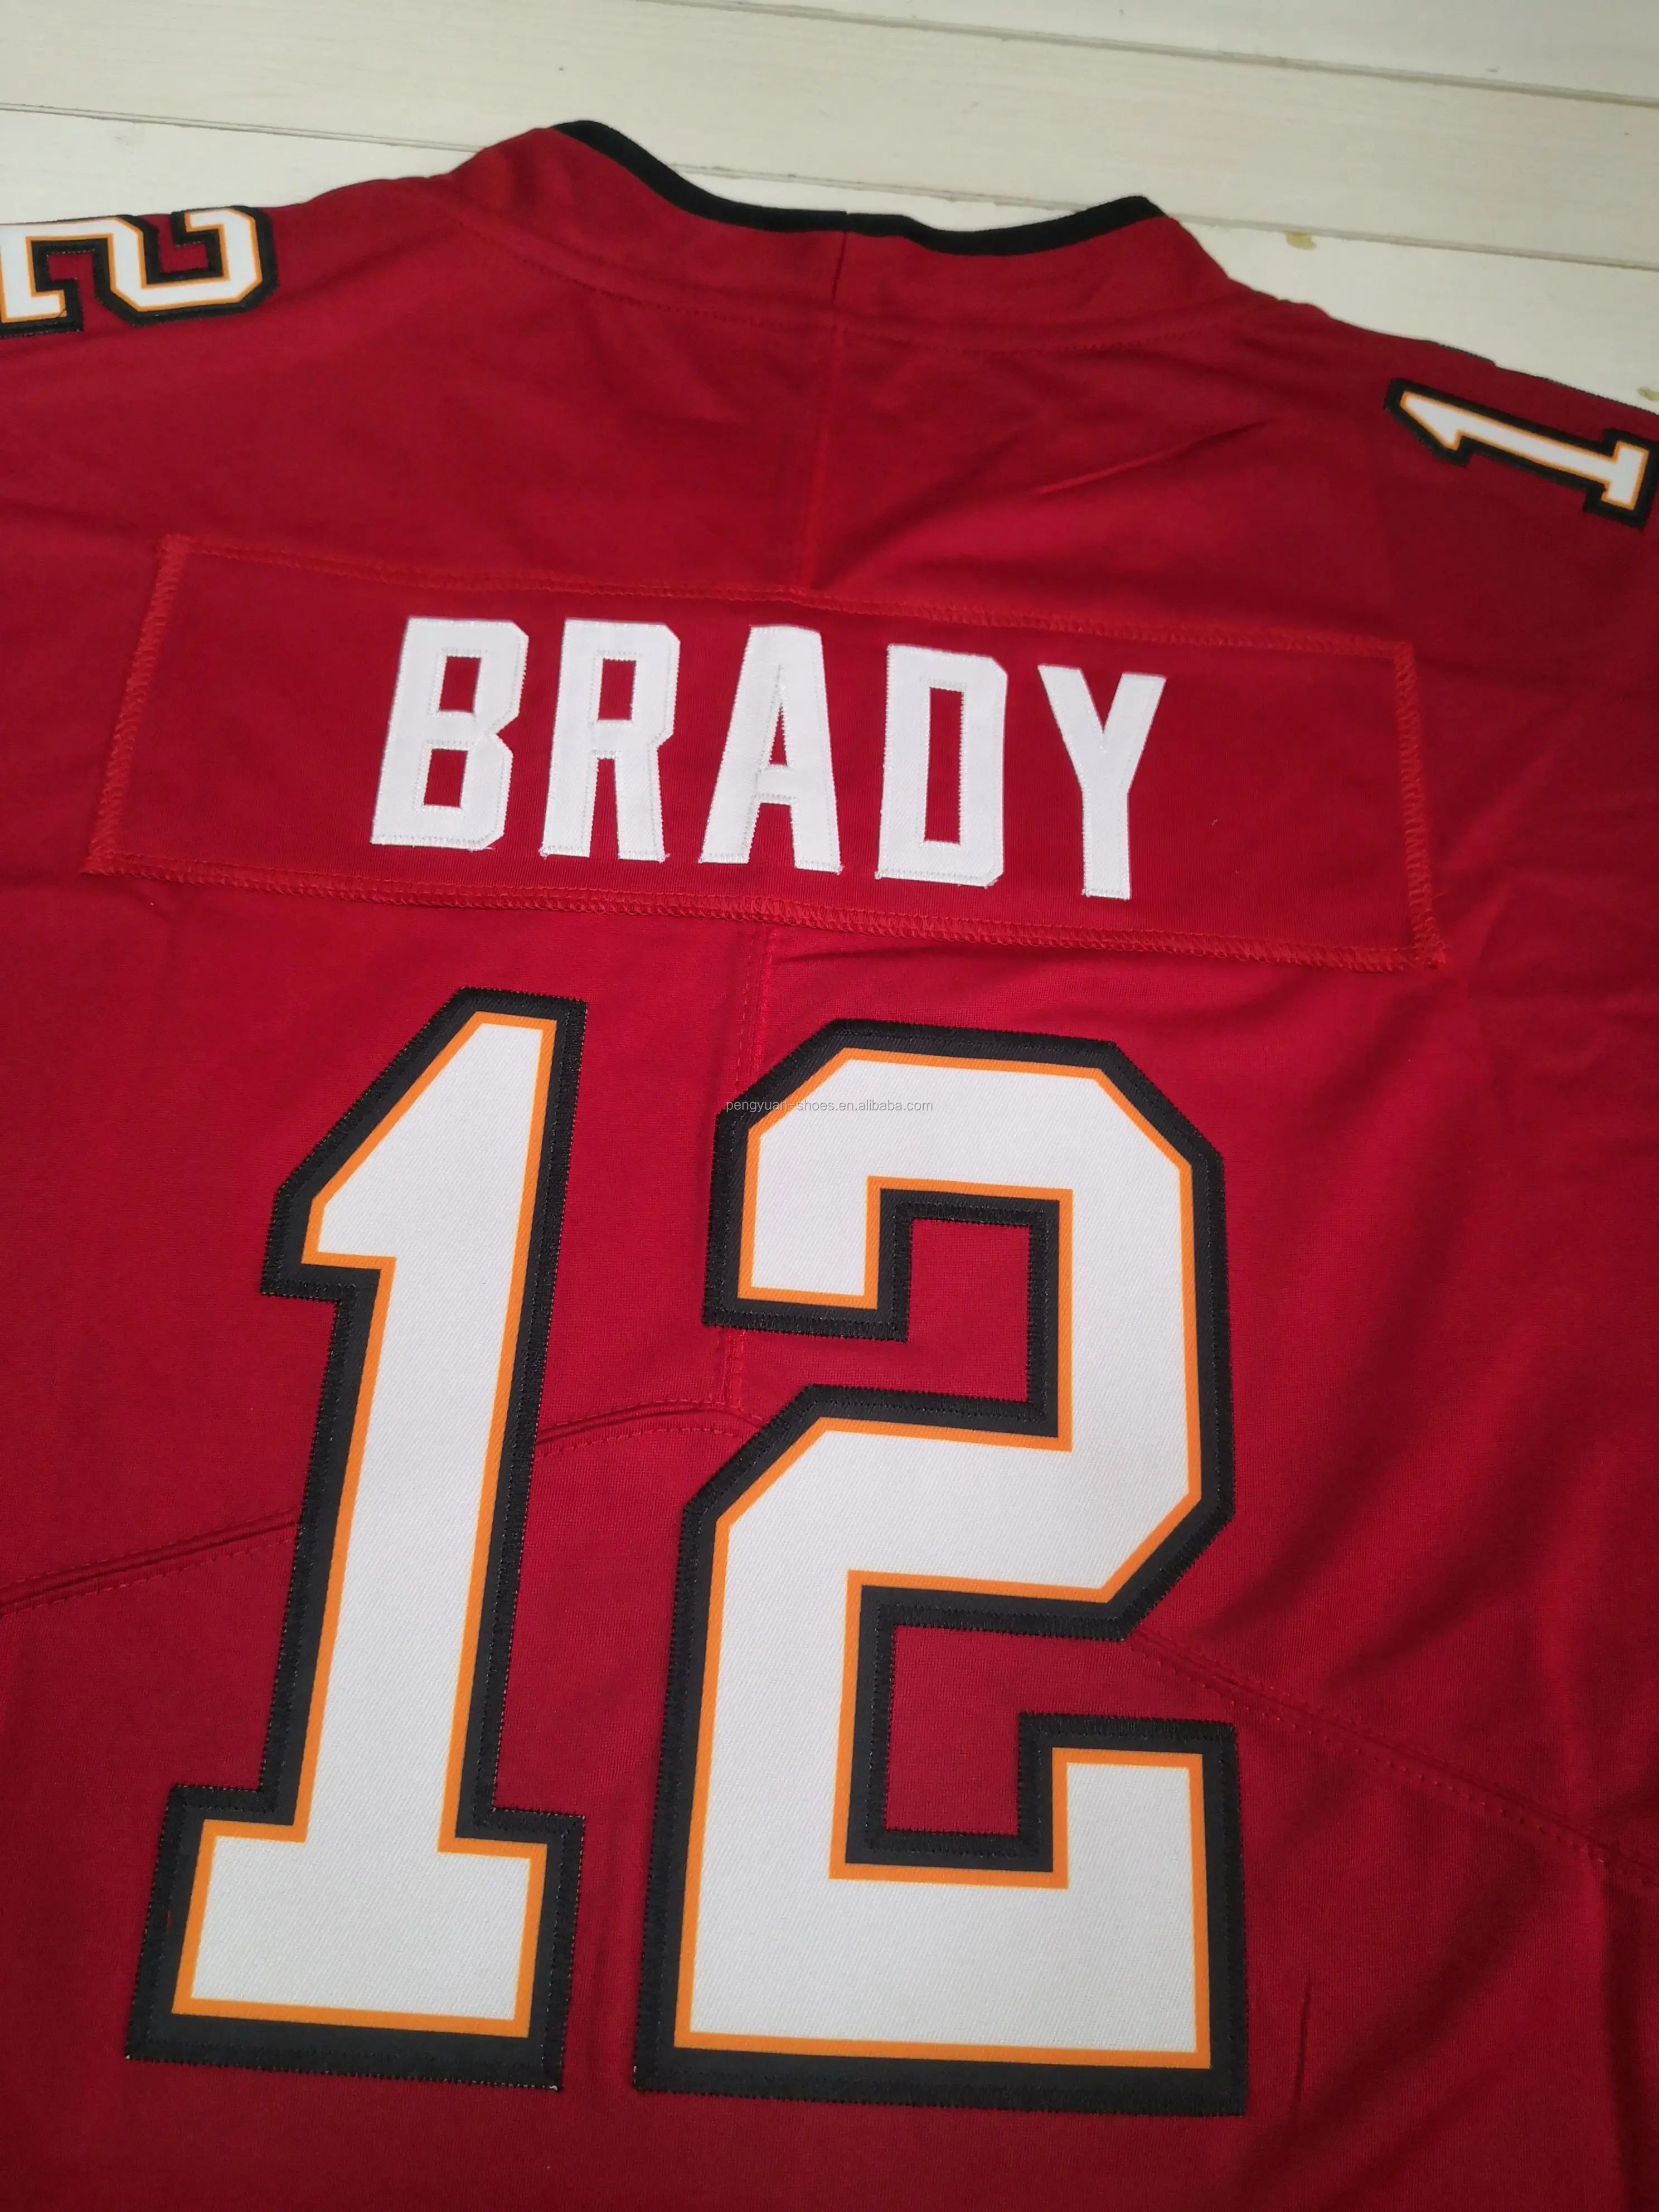 Latest 2020 Mens #12 Tom Brady Tb Stitched American Football ...